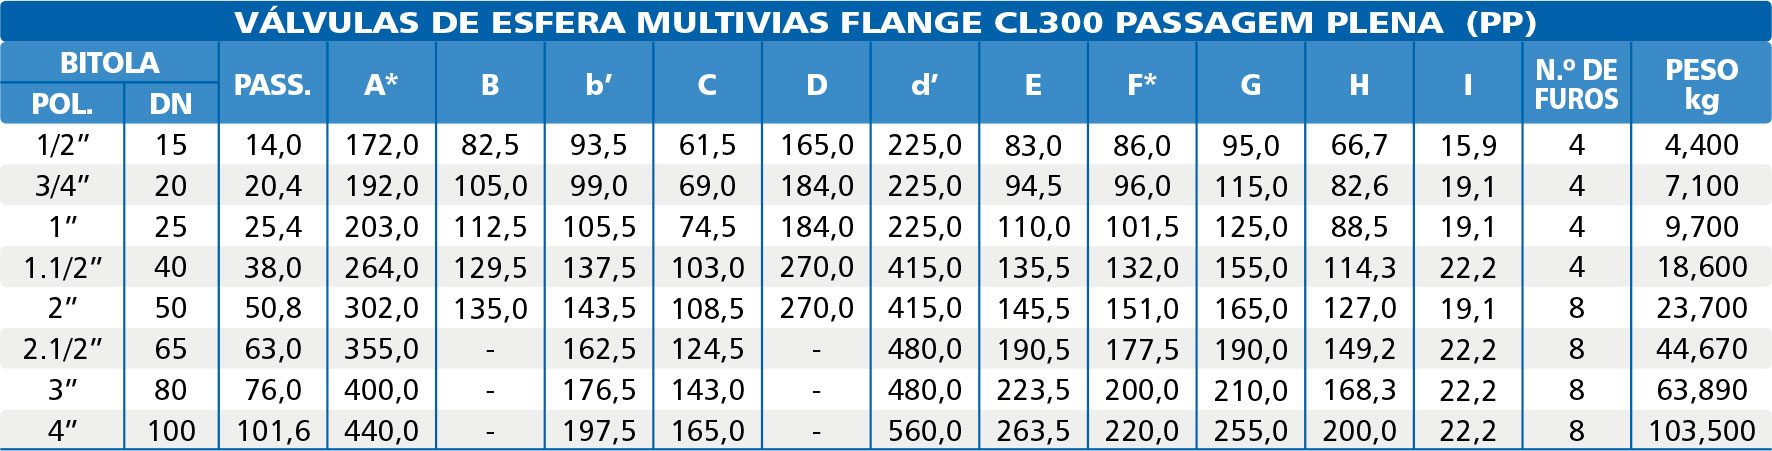 Valvula-de-Esfera-Direcional-Multivias-Flange-Classe-300-DIN-Plena-tabela